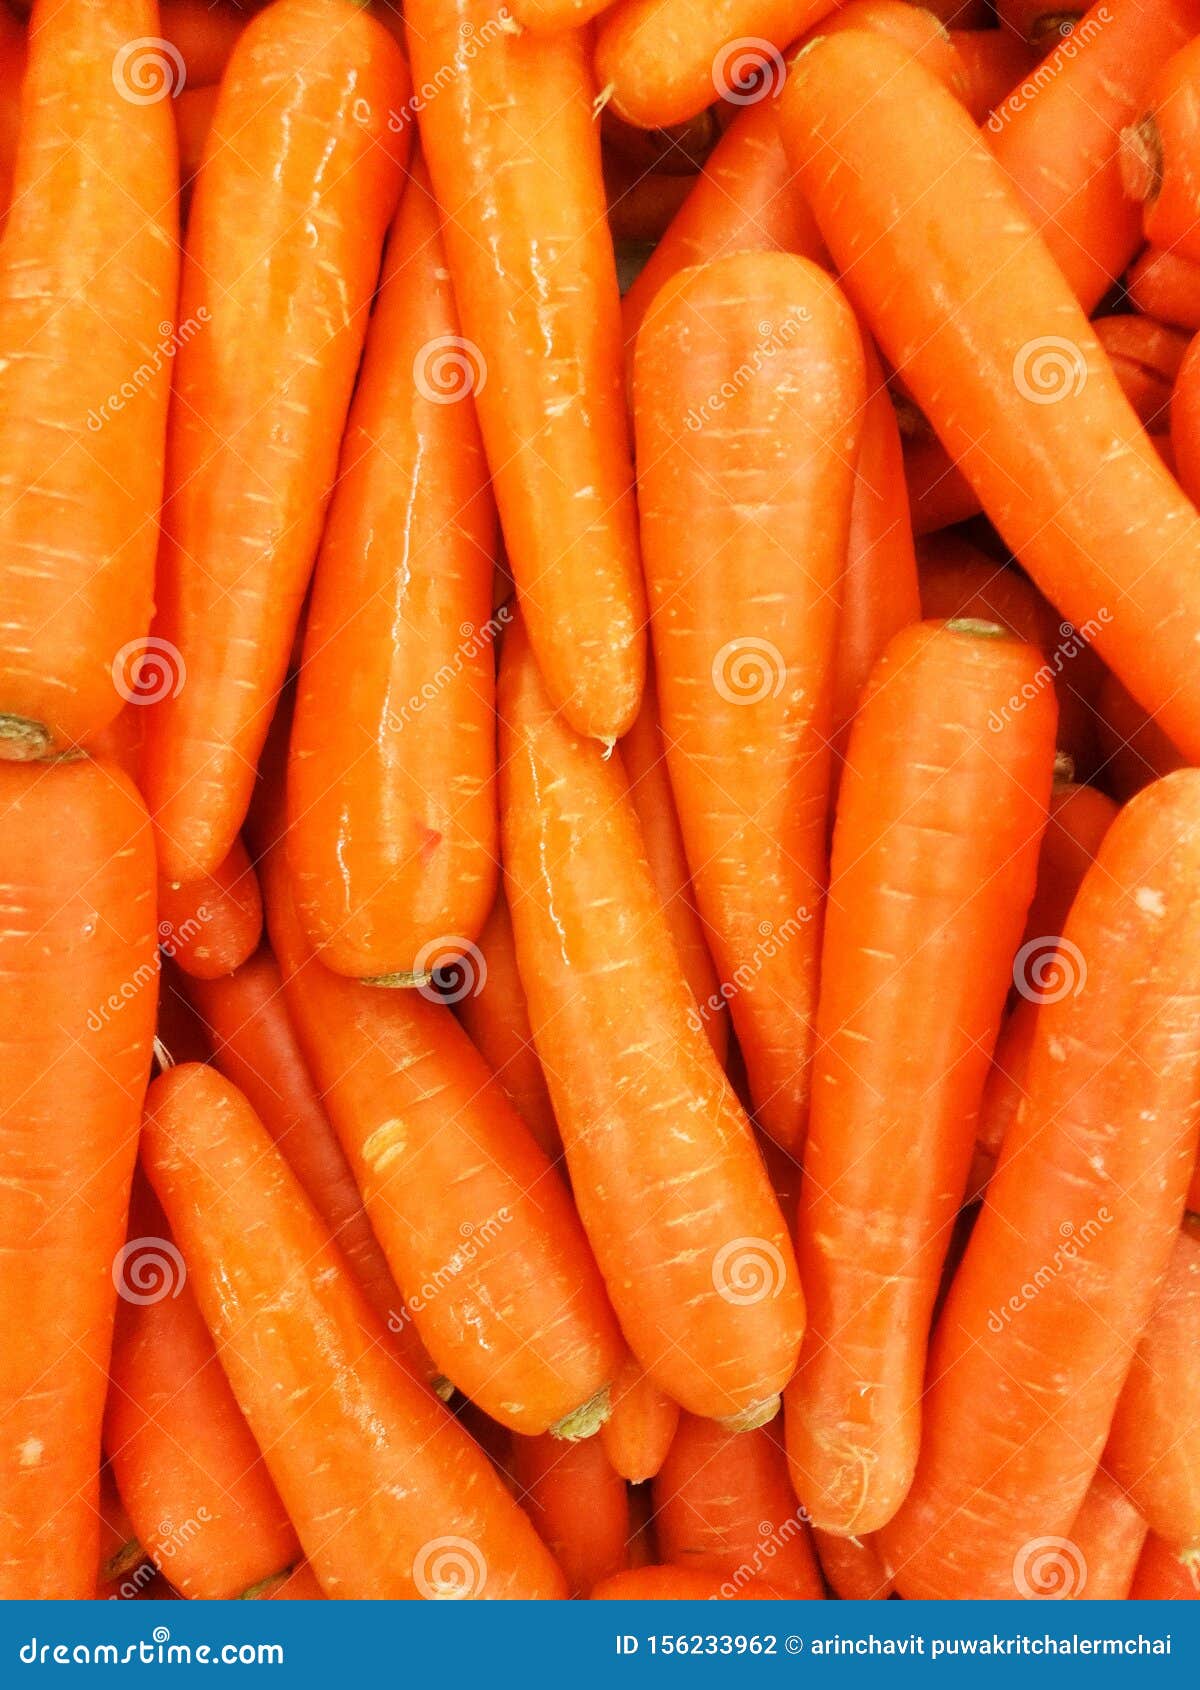 65205 Carrot Wallpaper Images Stock Photos  Vectors  Shutterstock